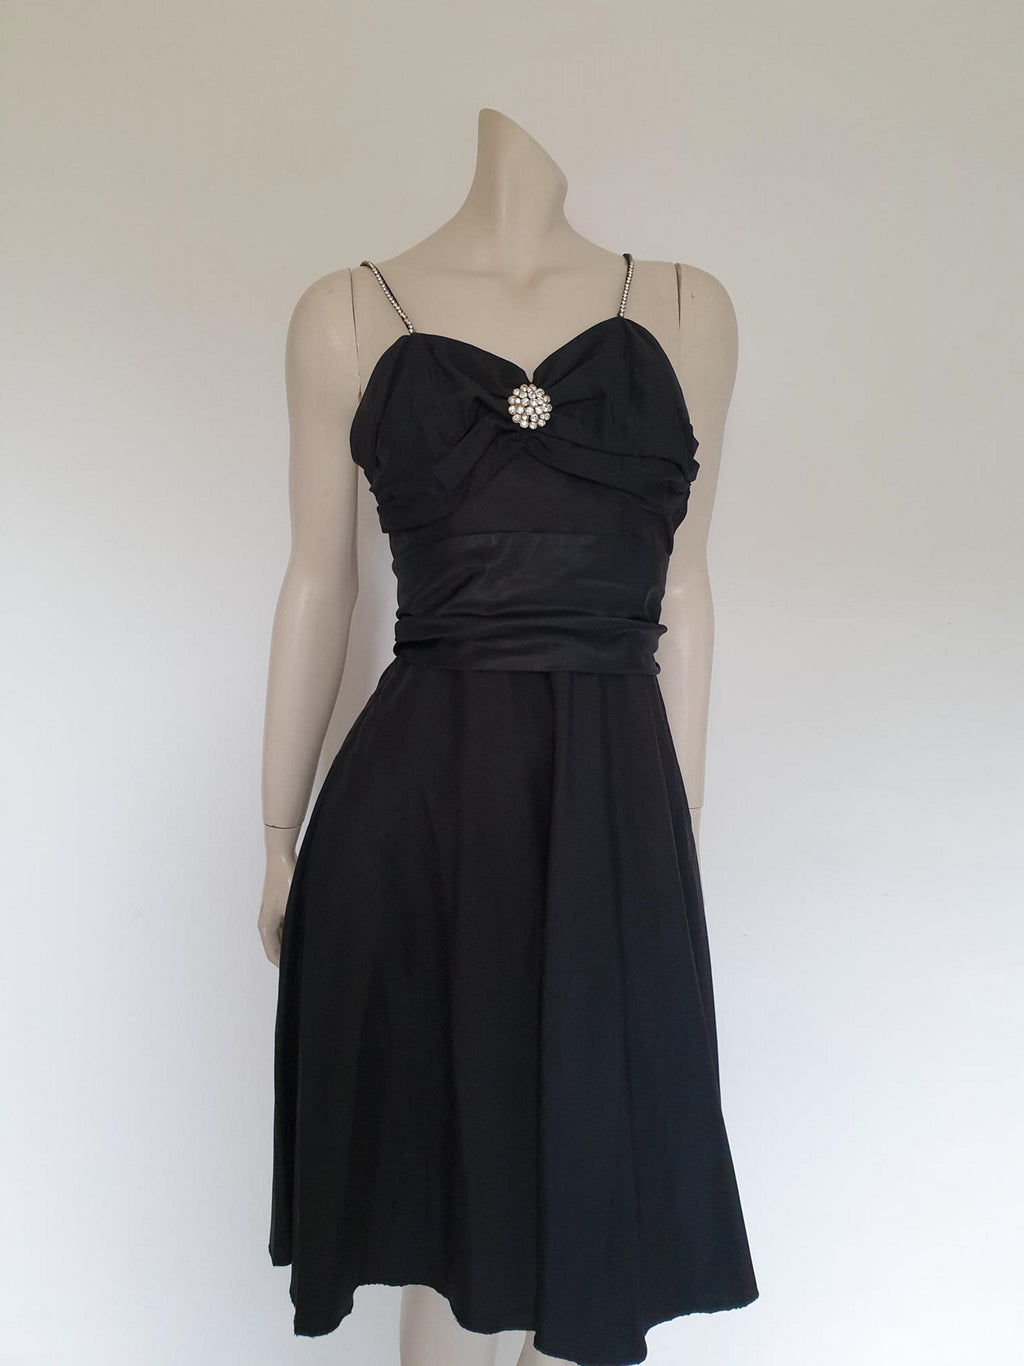 1950s vintage black taffeta dance dress with full skirt diamantes and cummerbund xs